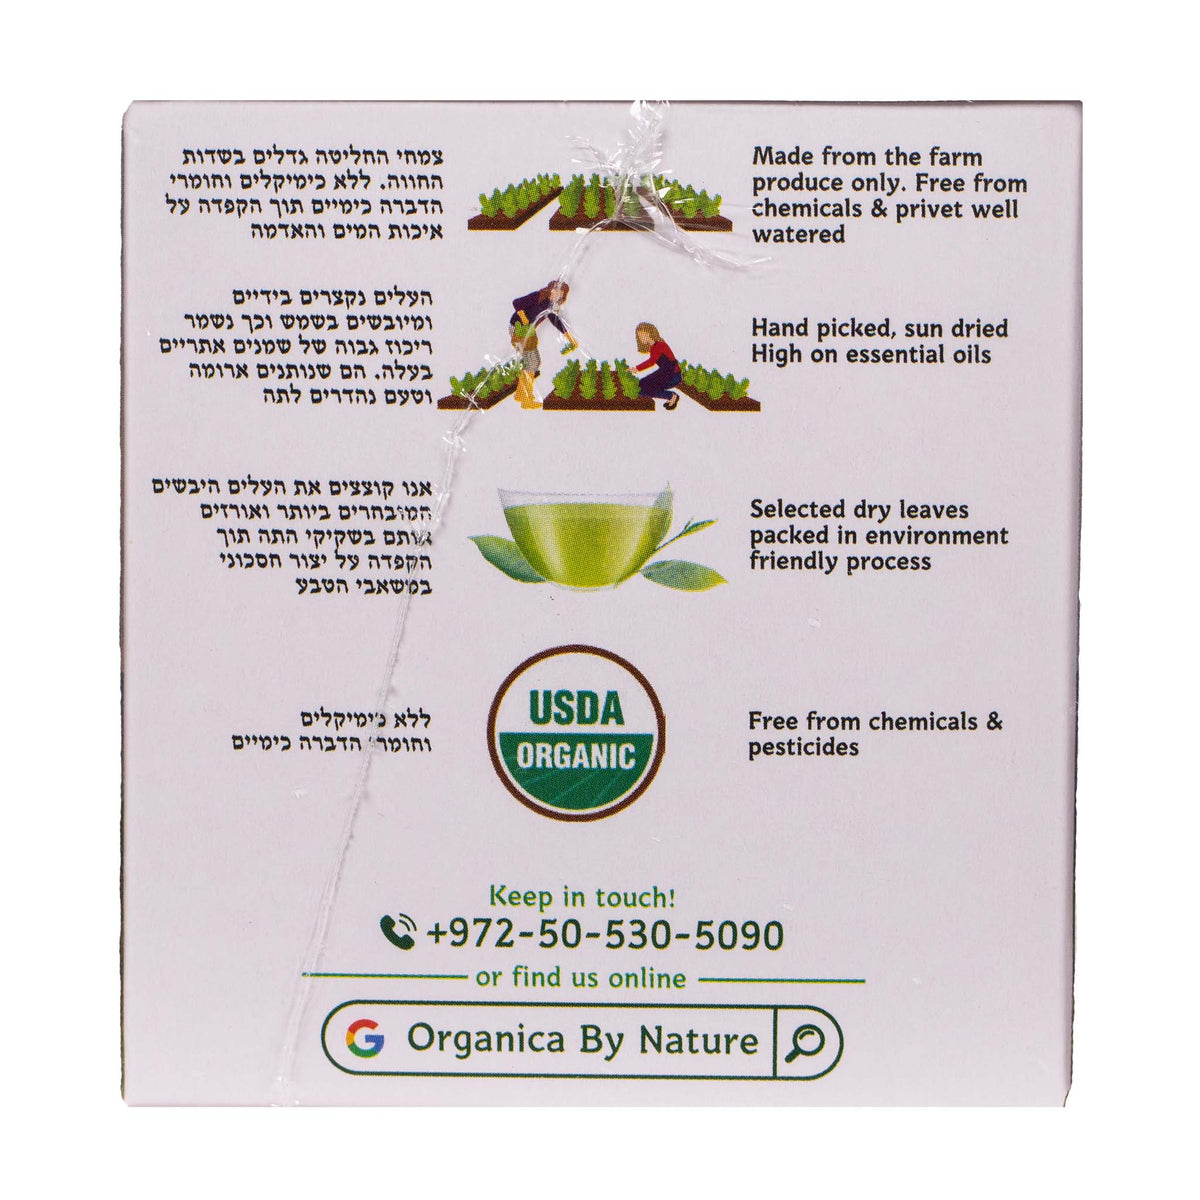 Organic Lemongrass &amp; Indian Mint Tea